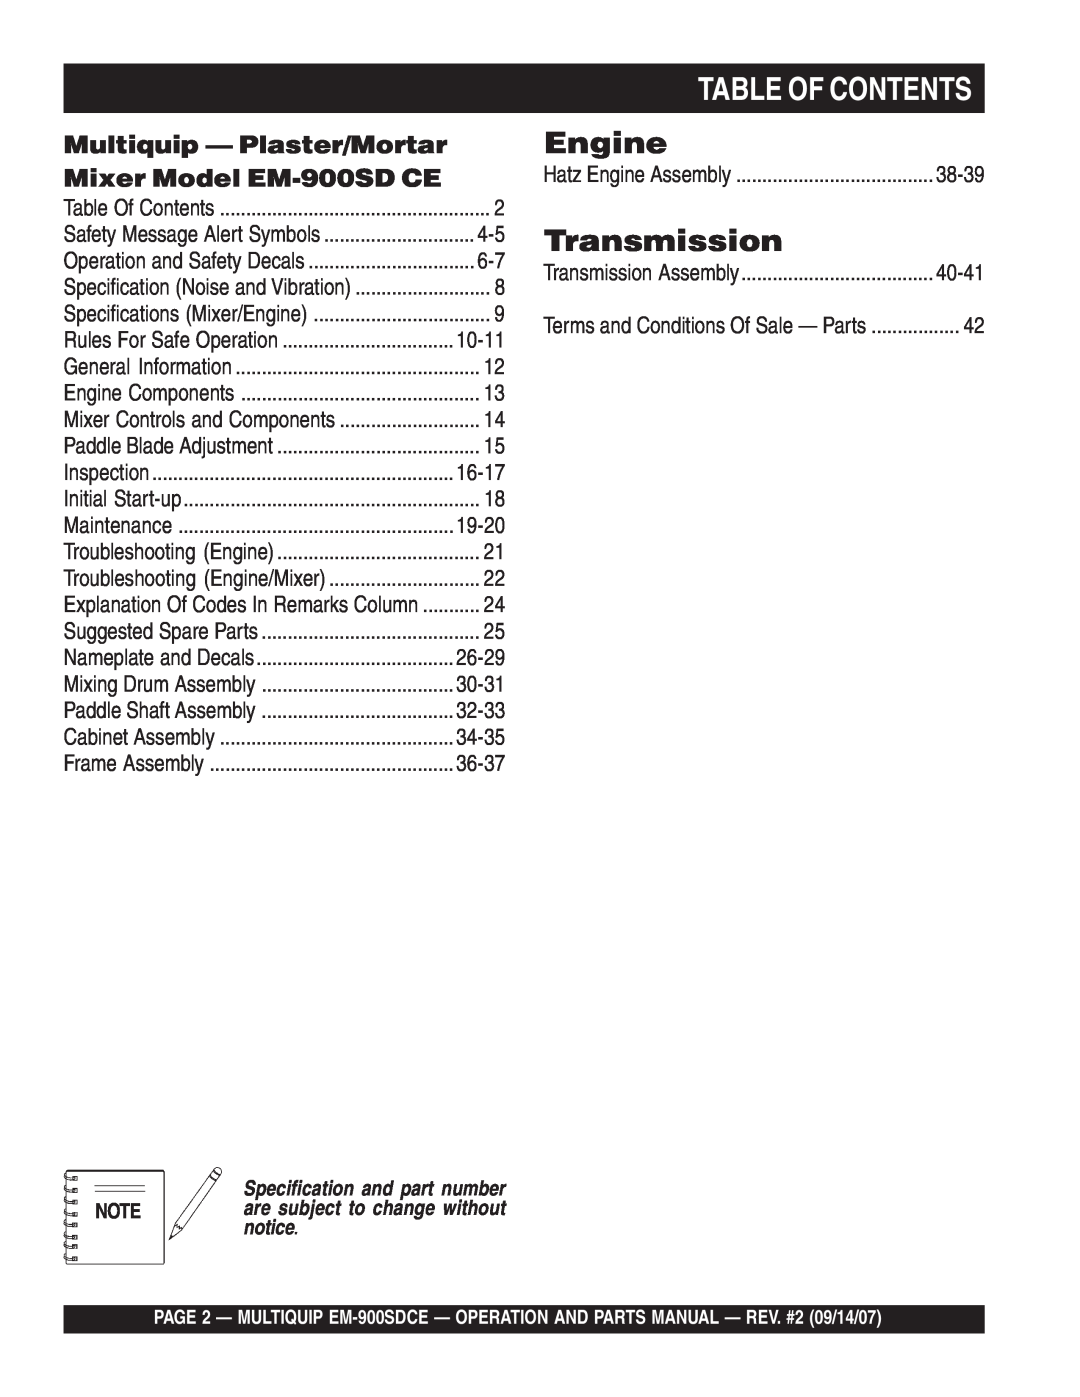 Multiquip manual Engine, Transmission, Table Of Contents, Multiquip — Plaster/Mortar Mixer Model EM-900SDCE 